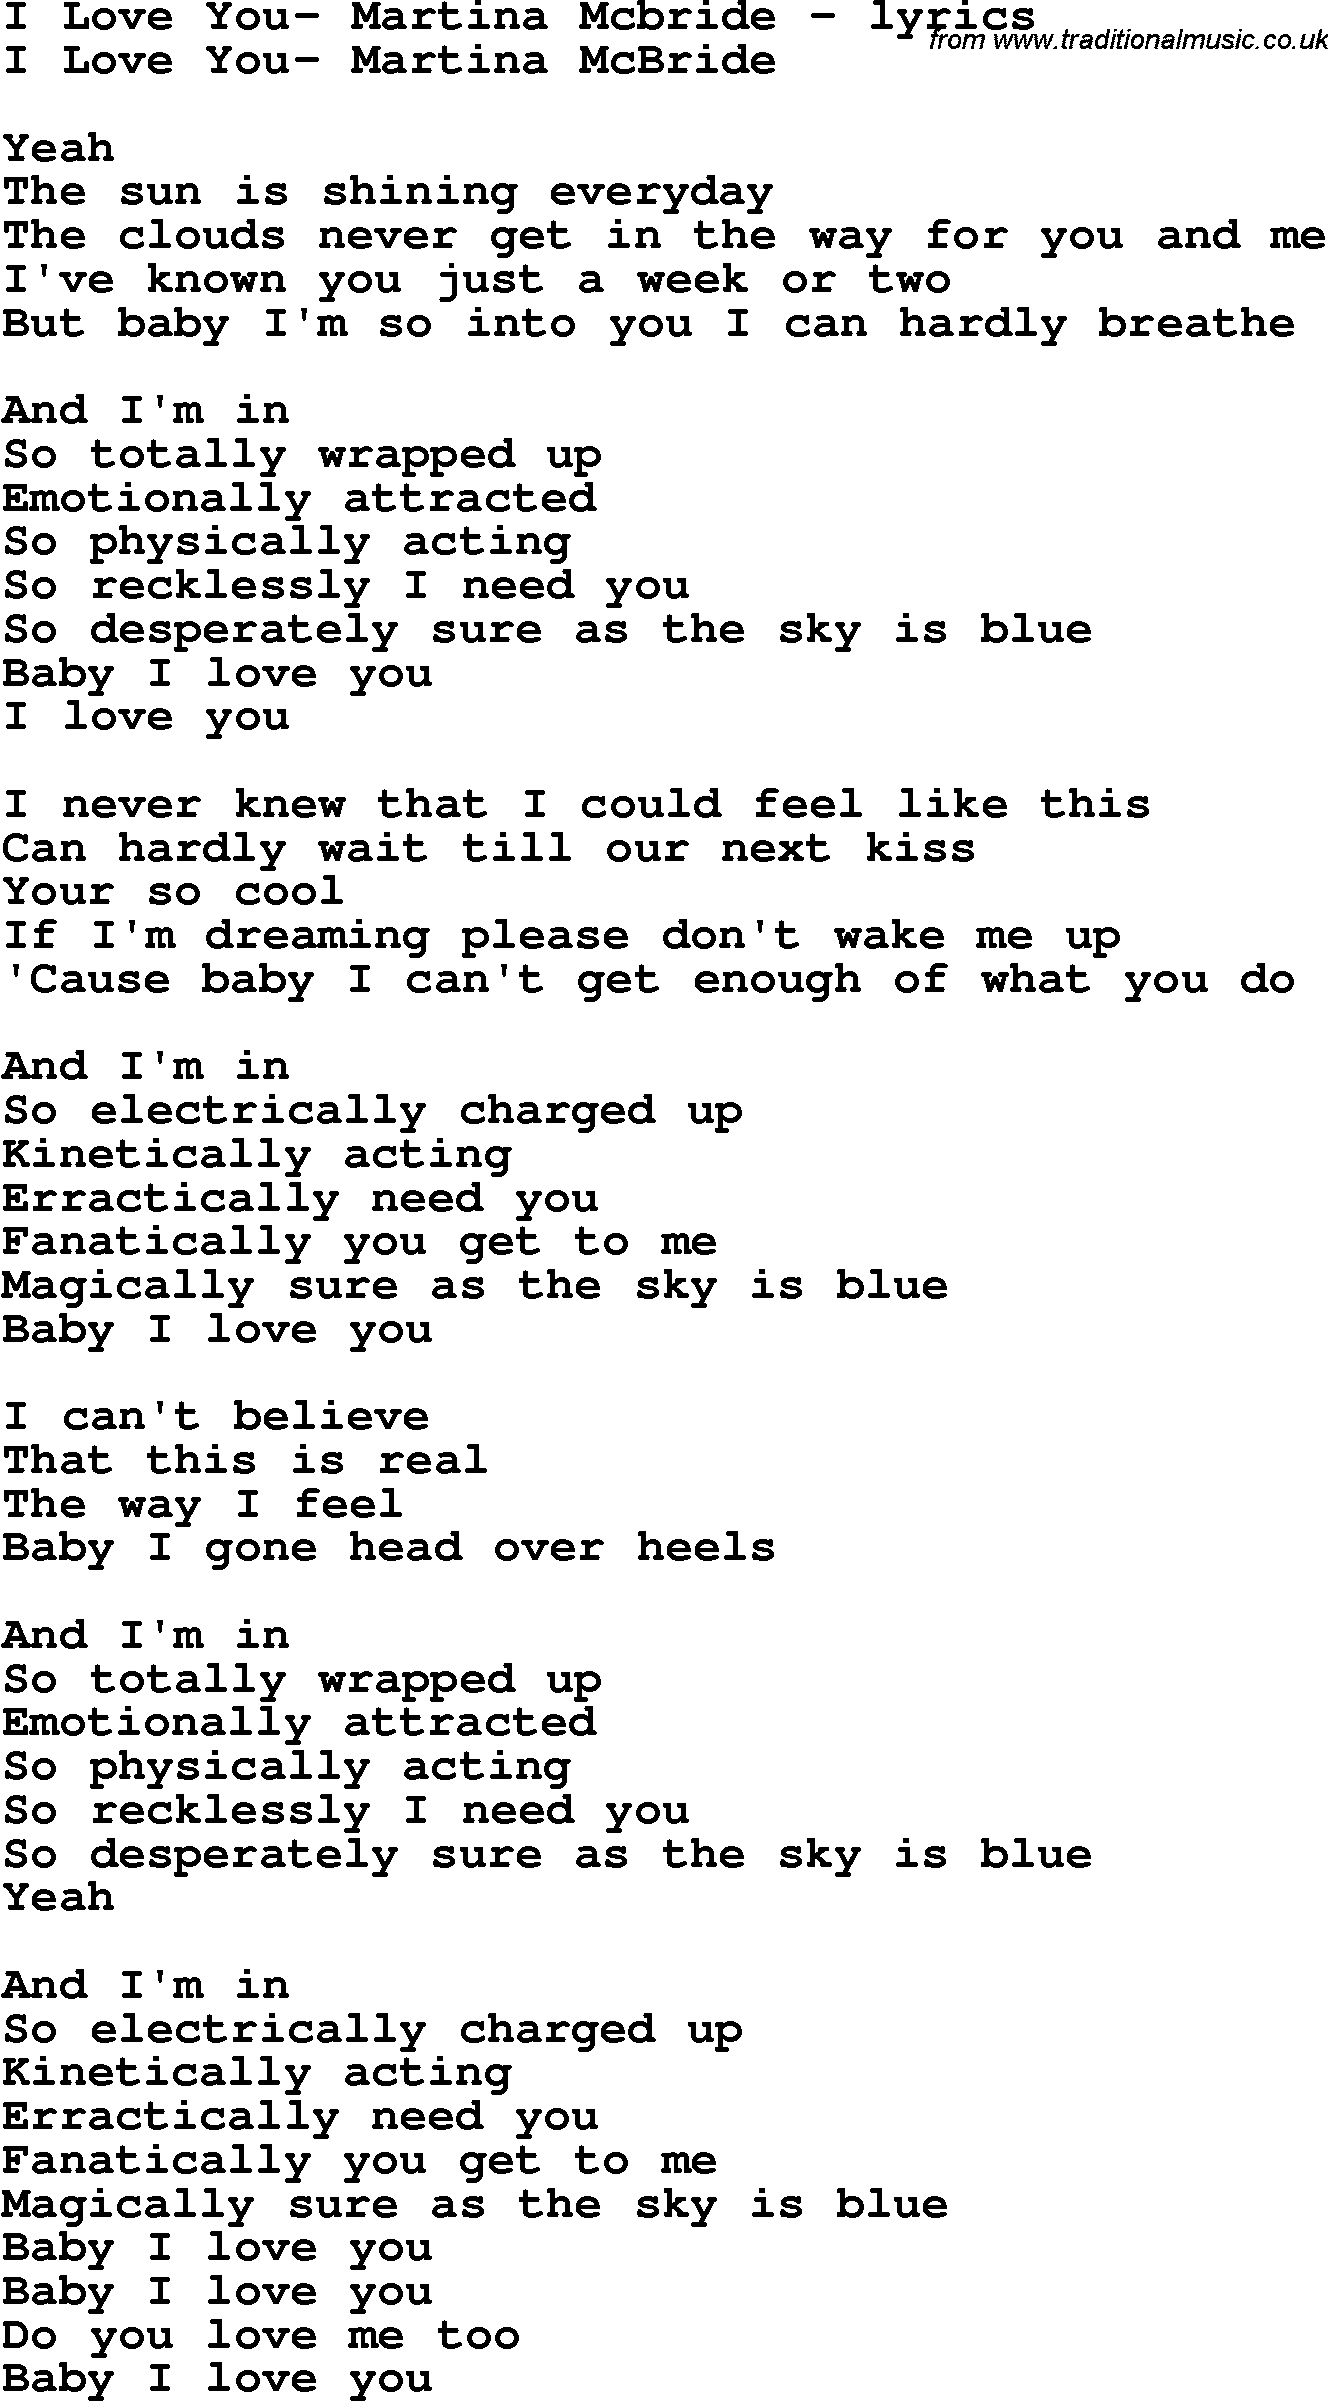 Love Song Lyrics for: I Love You- Martina Mcbride